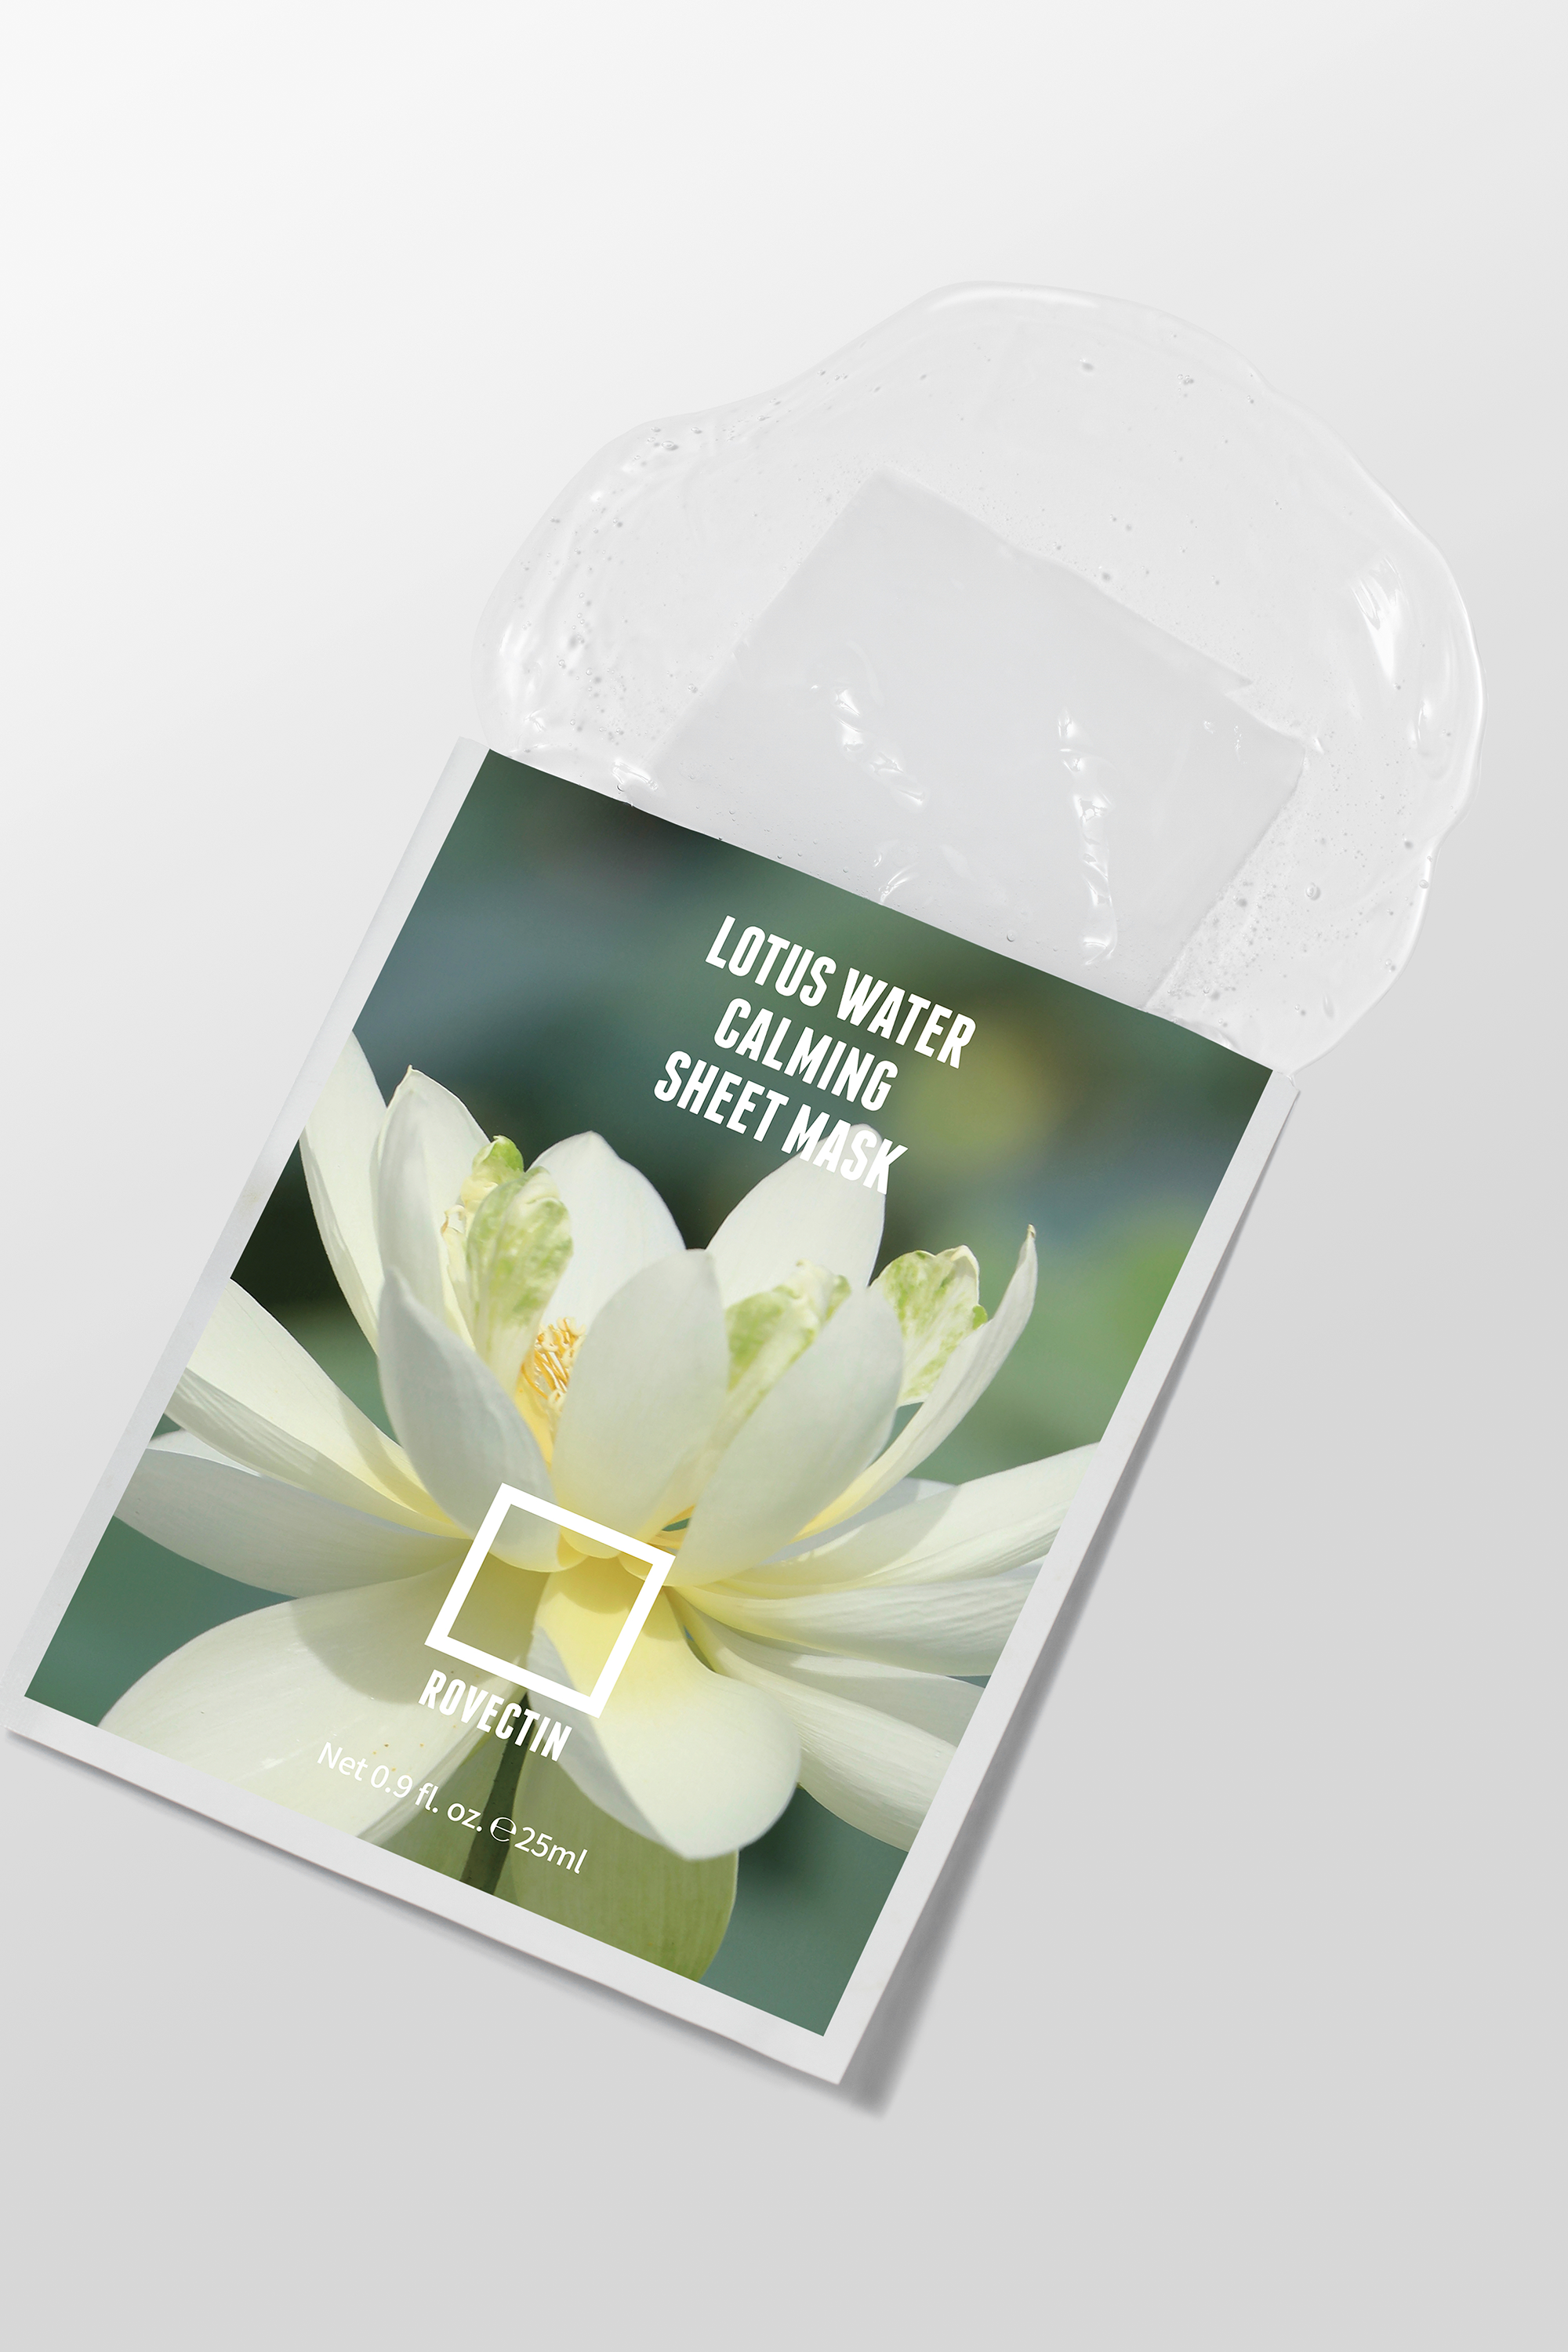 Lotus Water Calming Sheet Mask - Rovectin Skin Essentials